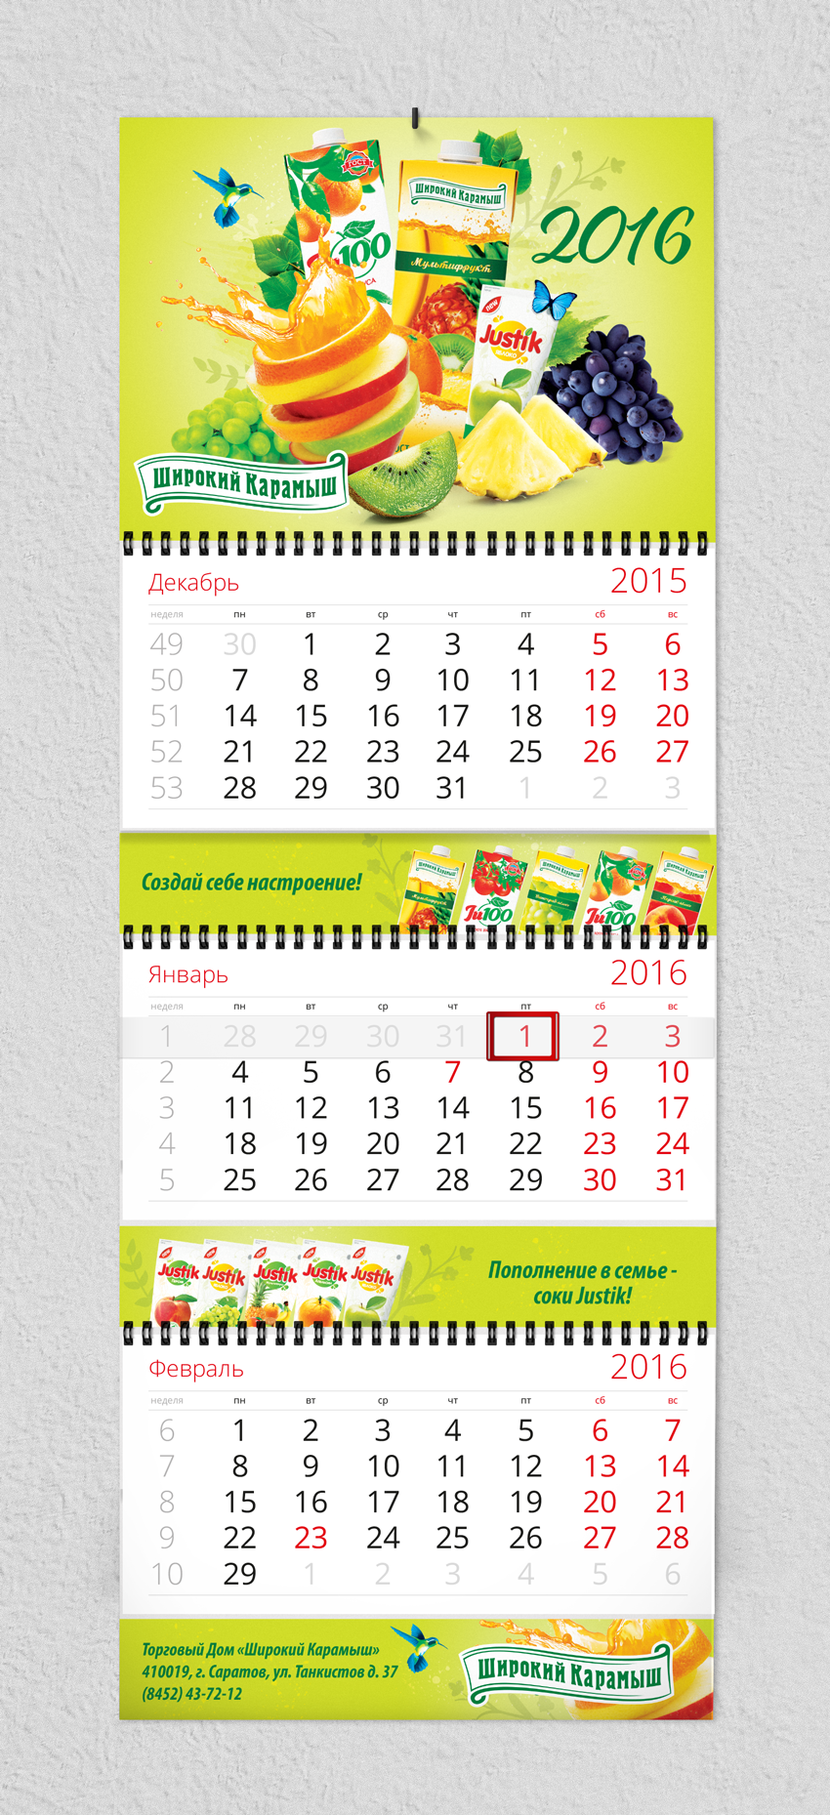 Широкий Карамыш - Календарь соки JUSTIK 0.2ml ( Широкий Карамыш)